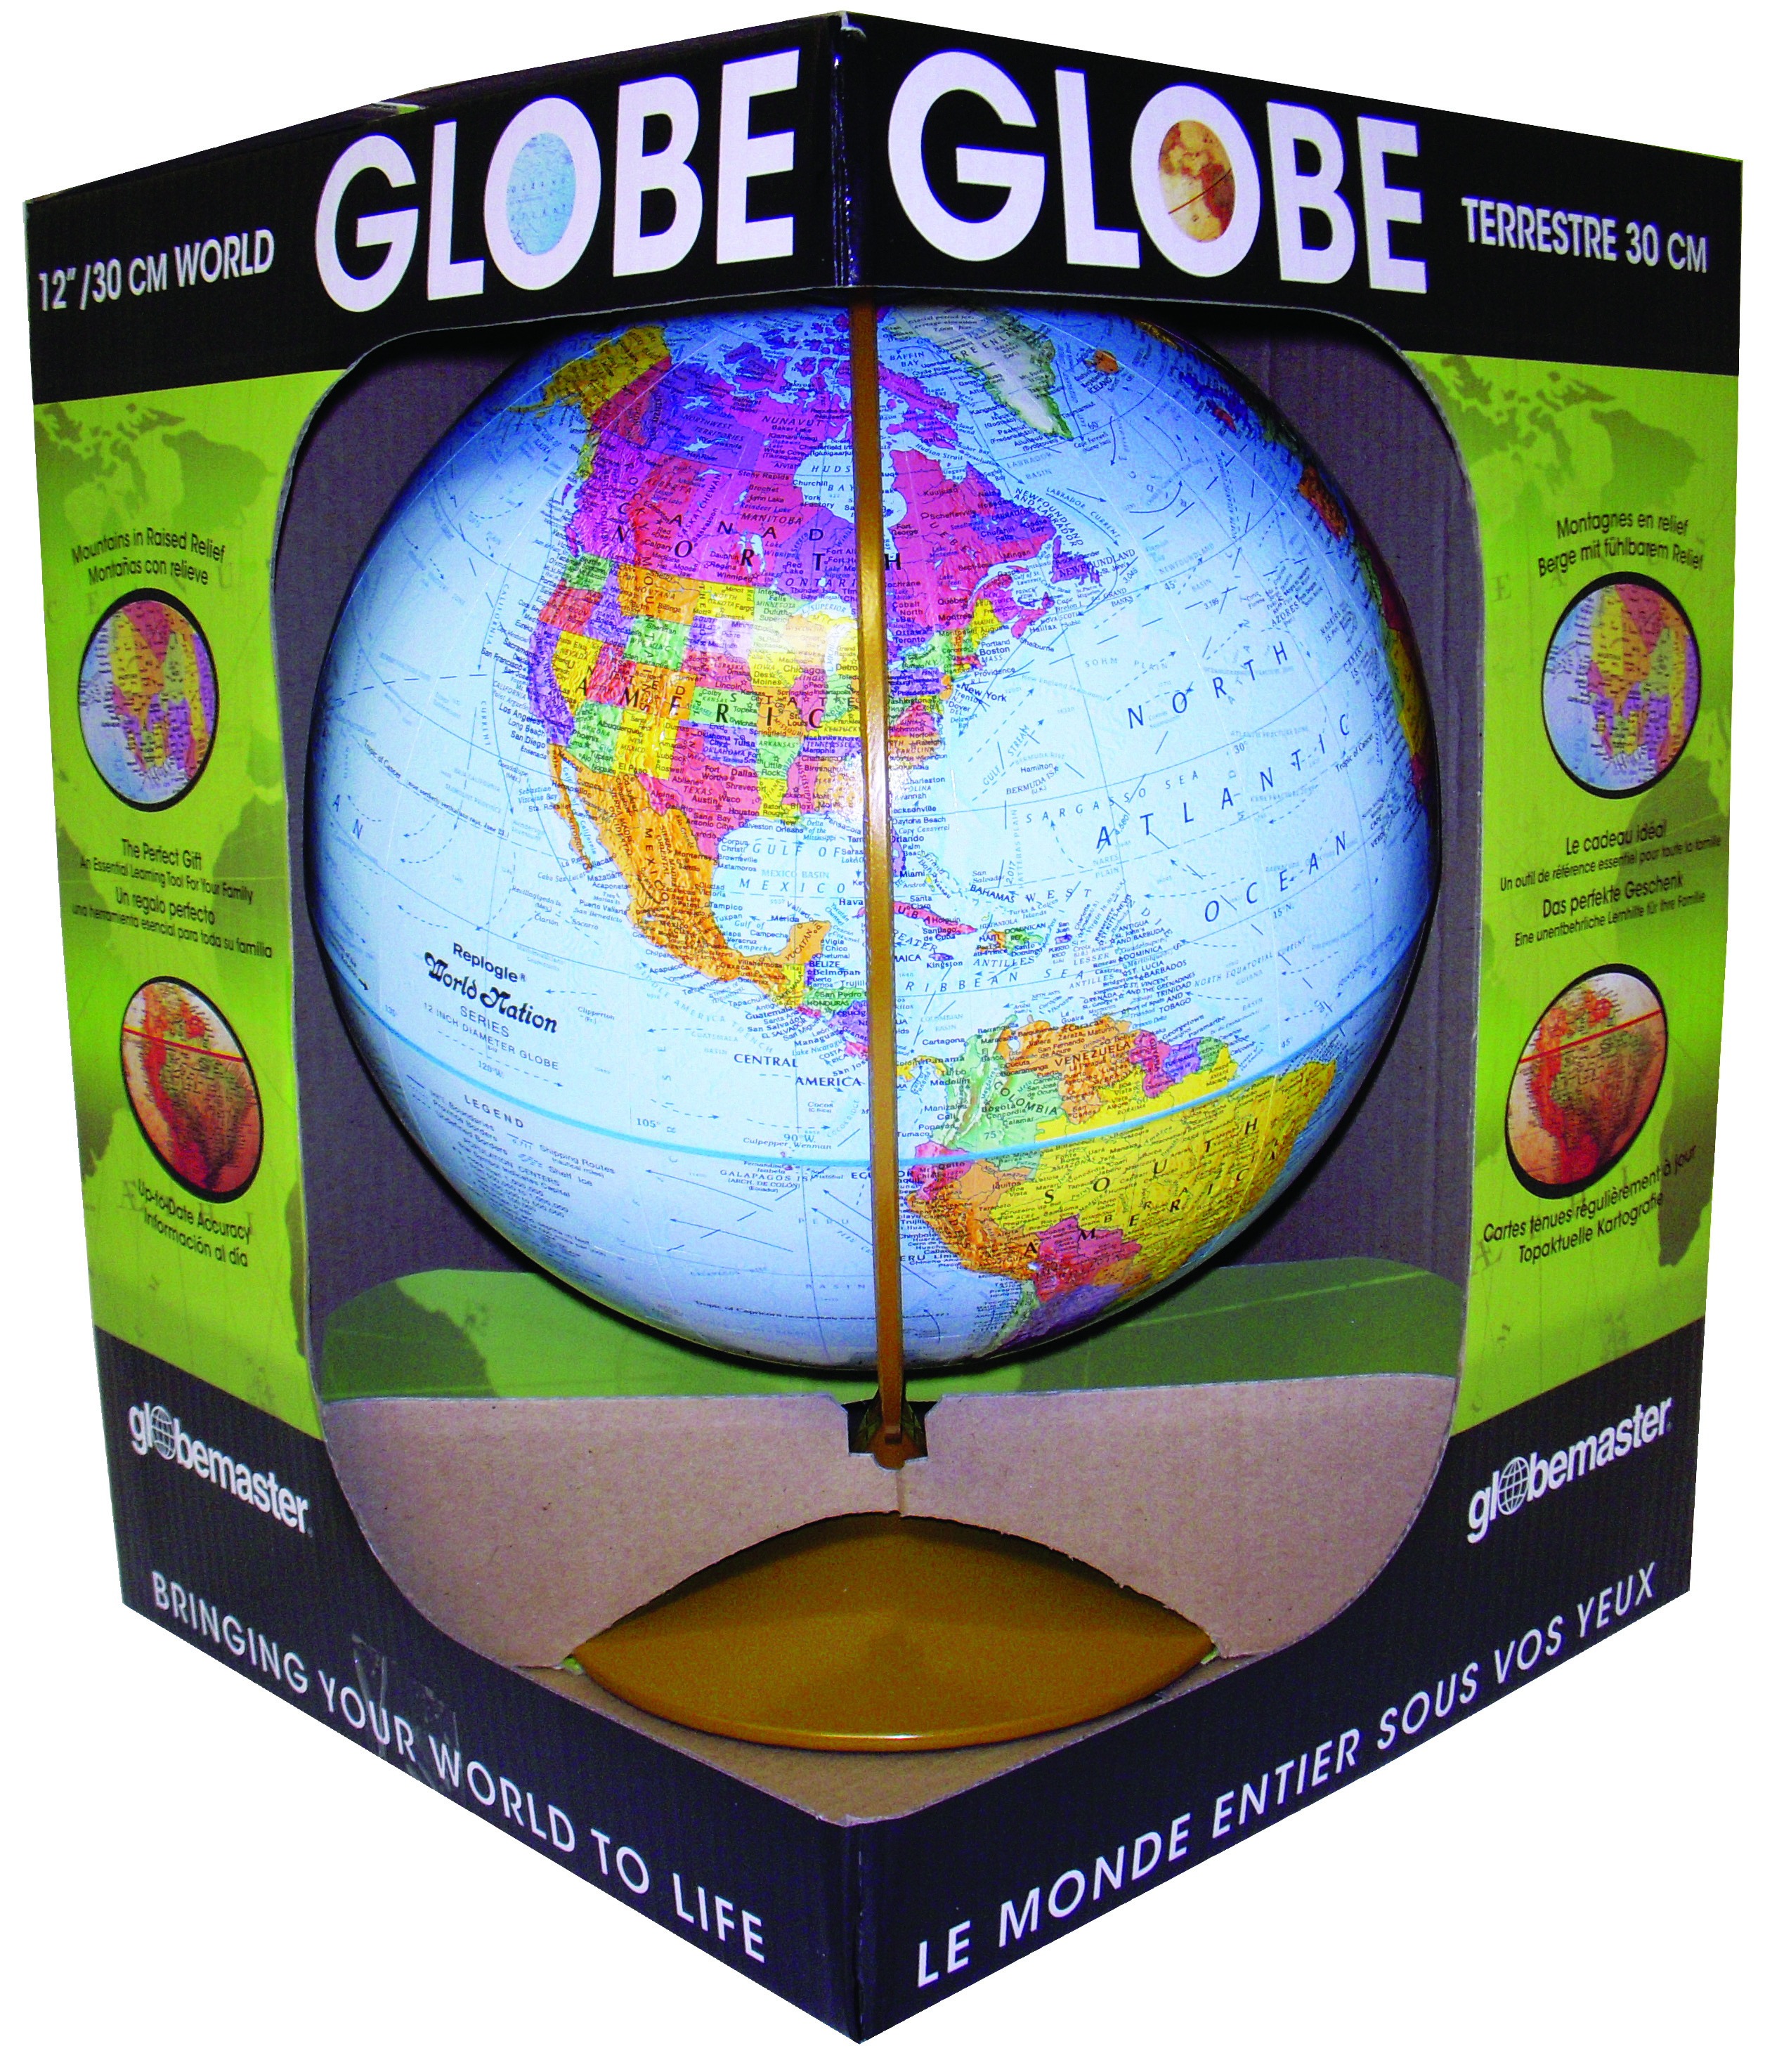 Explorer globe engineering. Explorer Globe. Глобус Венеры. Global Explorer. Globe in English.